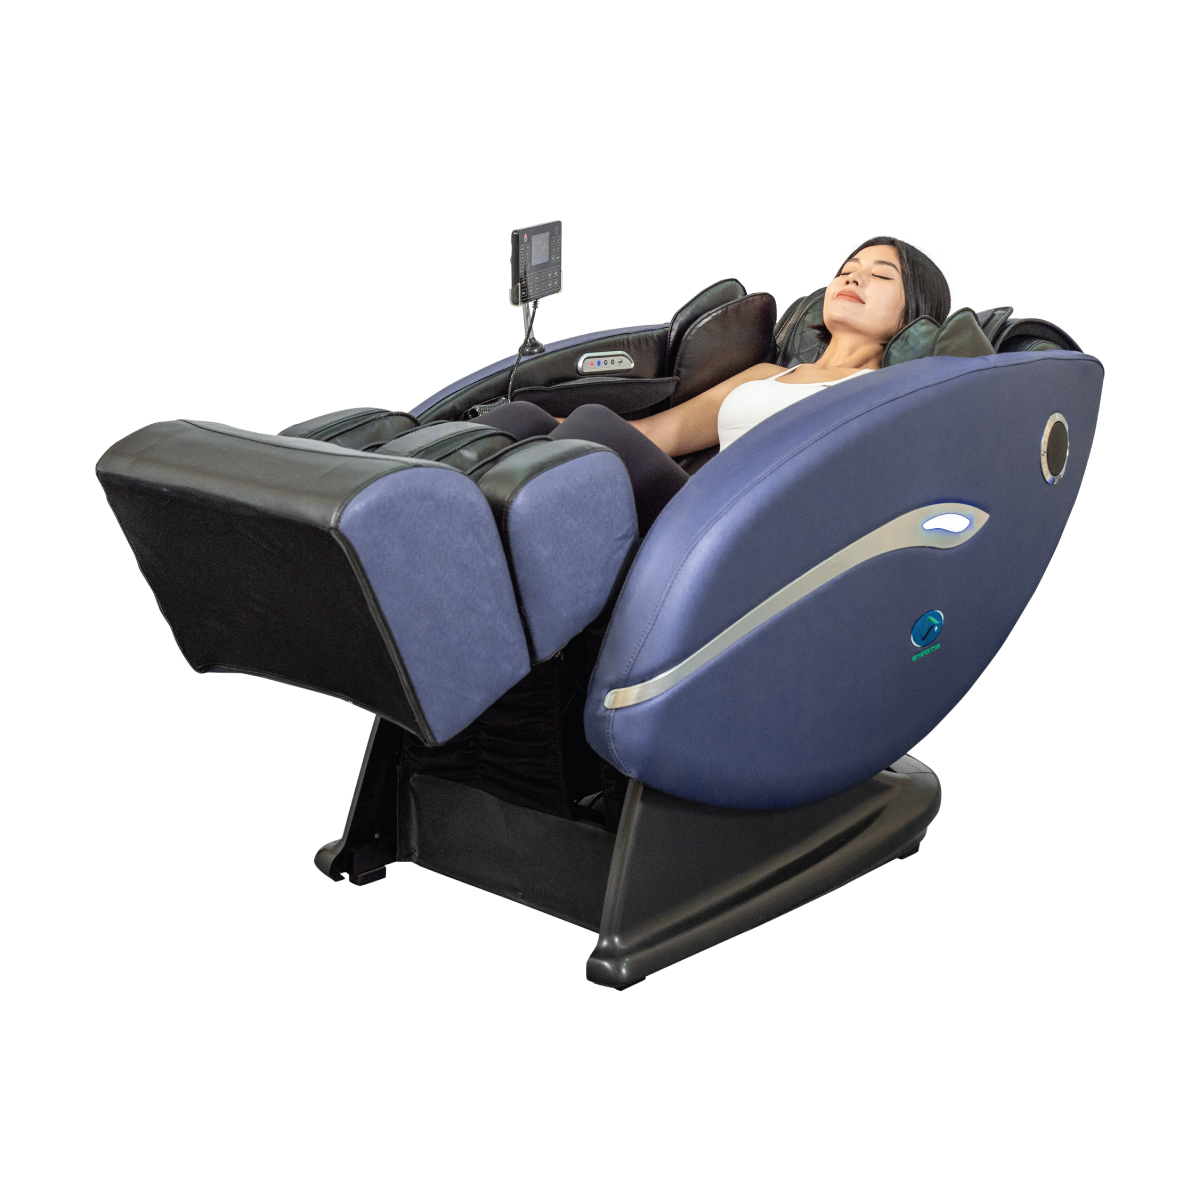 Ghế massage cao cấp ROYAL SKY NCOV RS-898C1